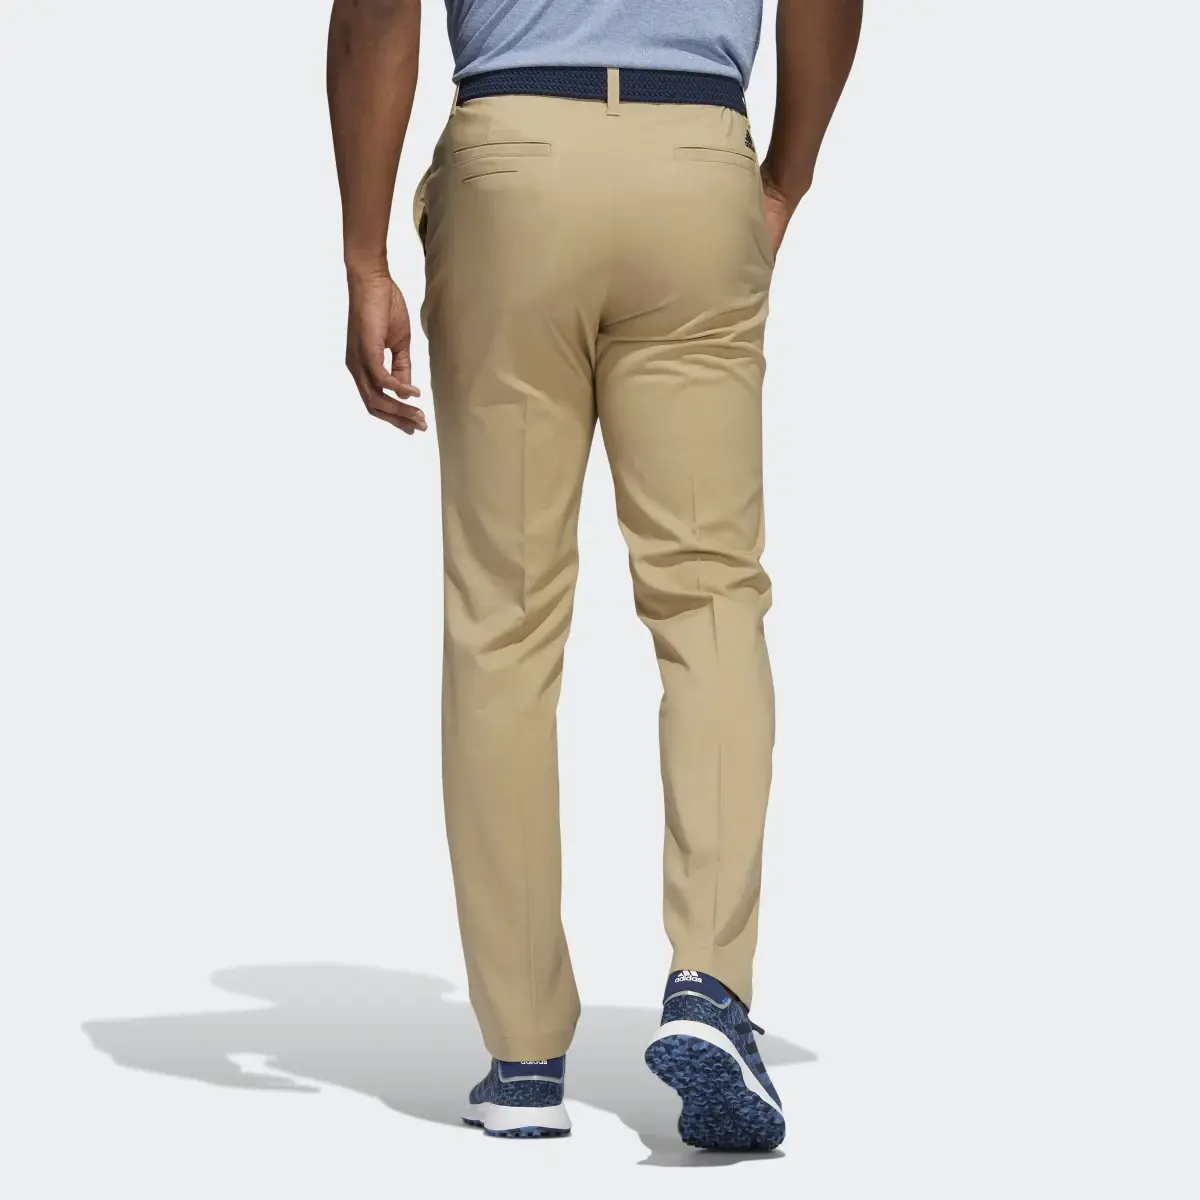 Adidas Ultimate365 Pants. 2